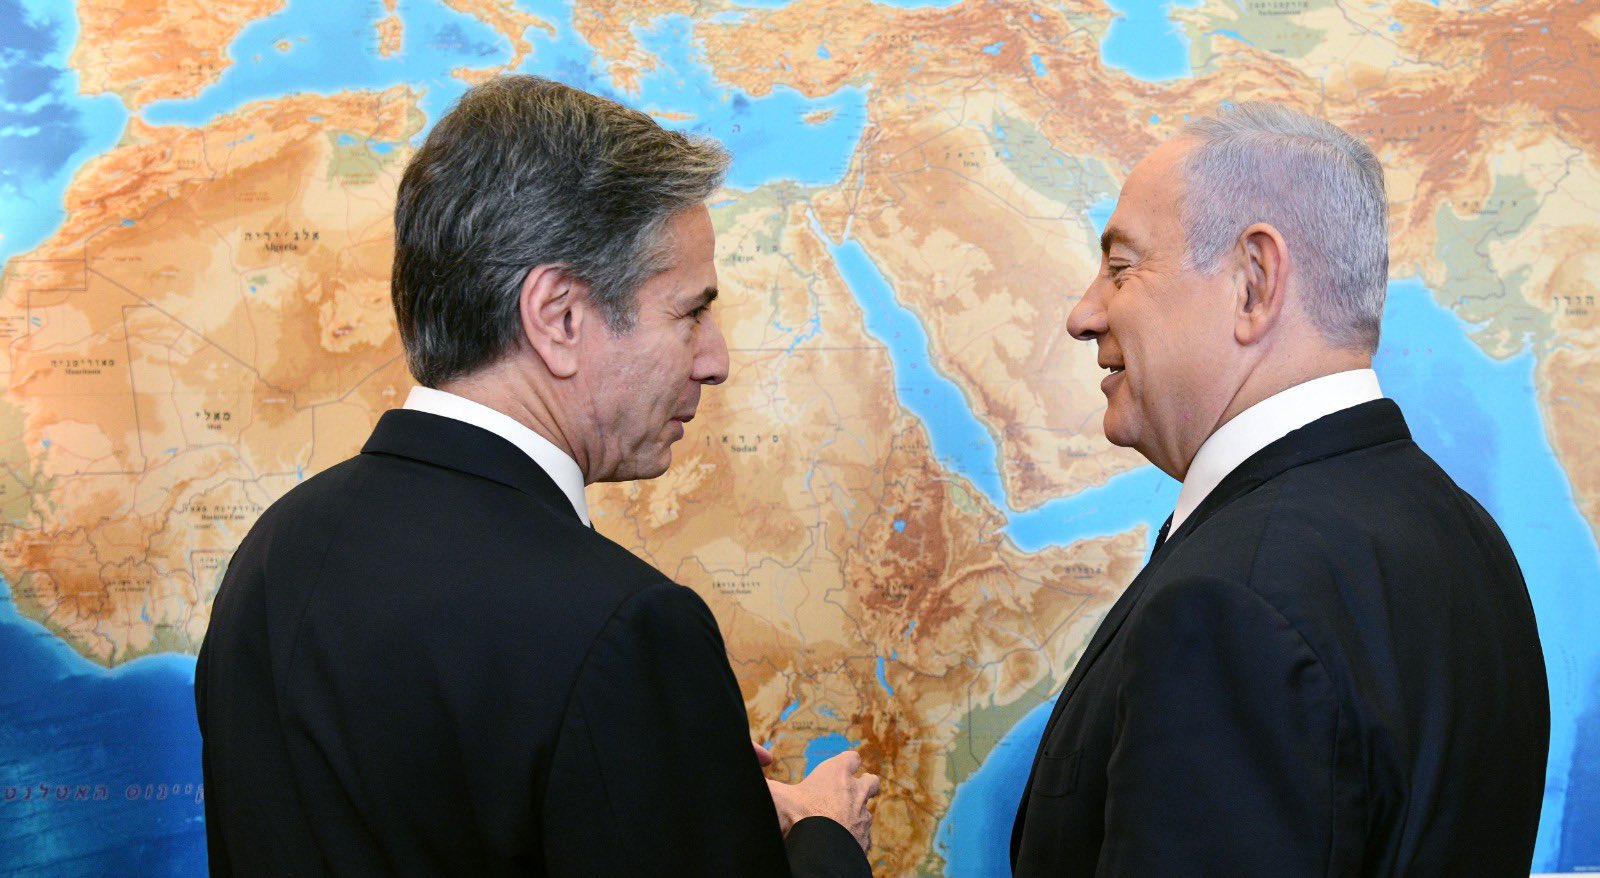 Guerra di Gaza, Blinken incontra Netanyahu: "Sempre al vostro fianco, Hamas non rappresenta i palestinesi"